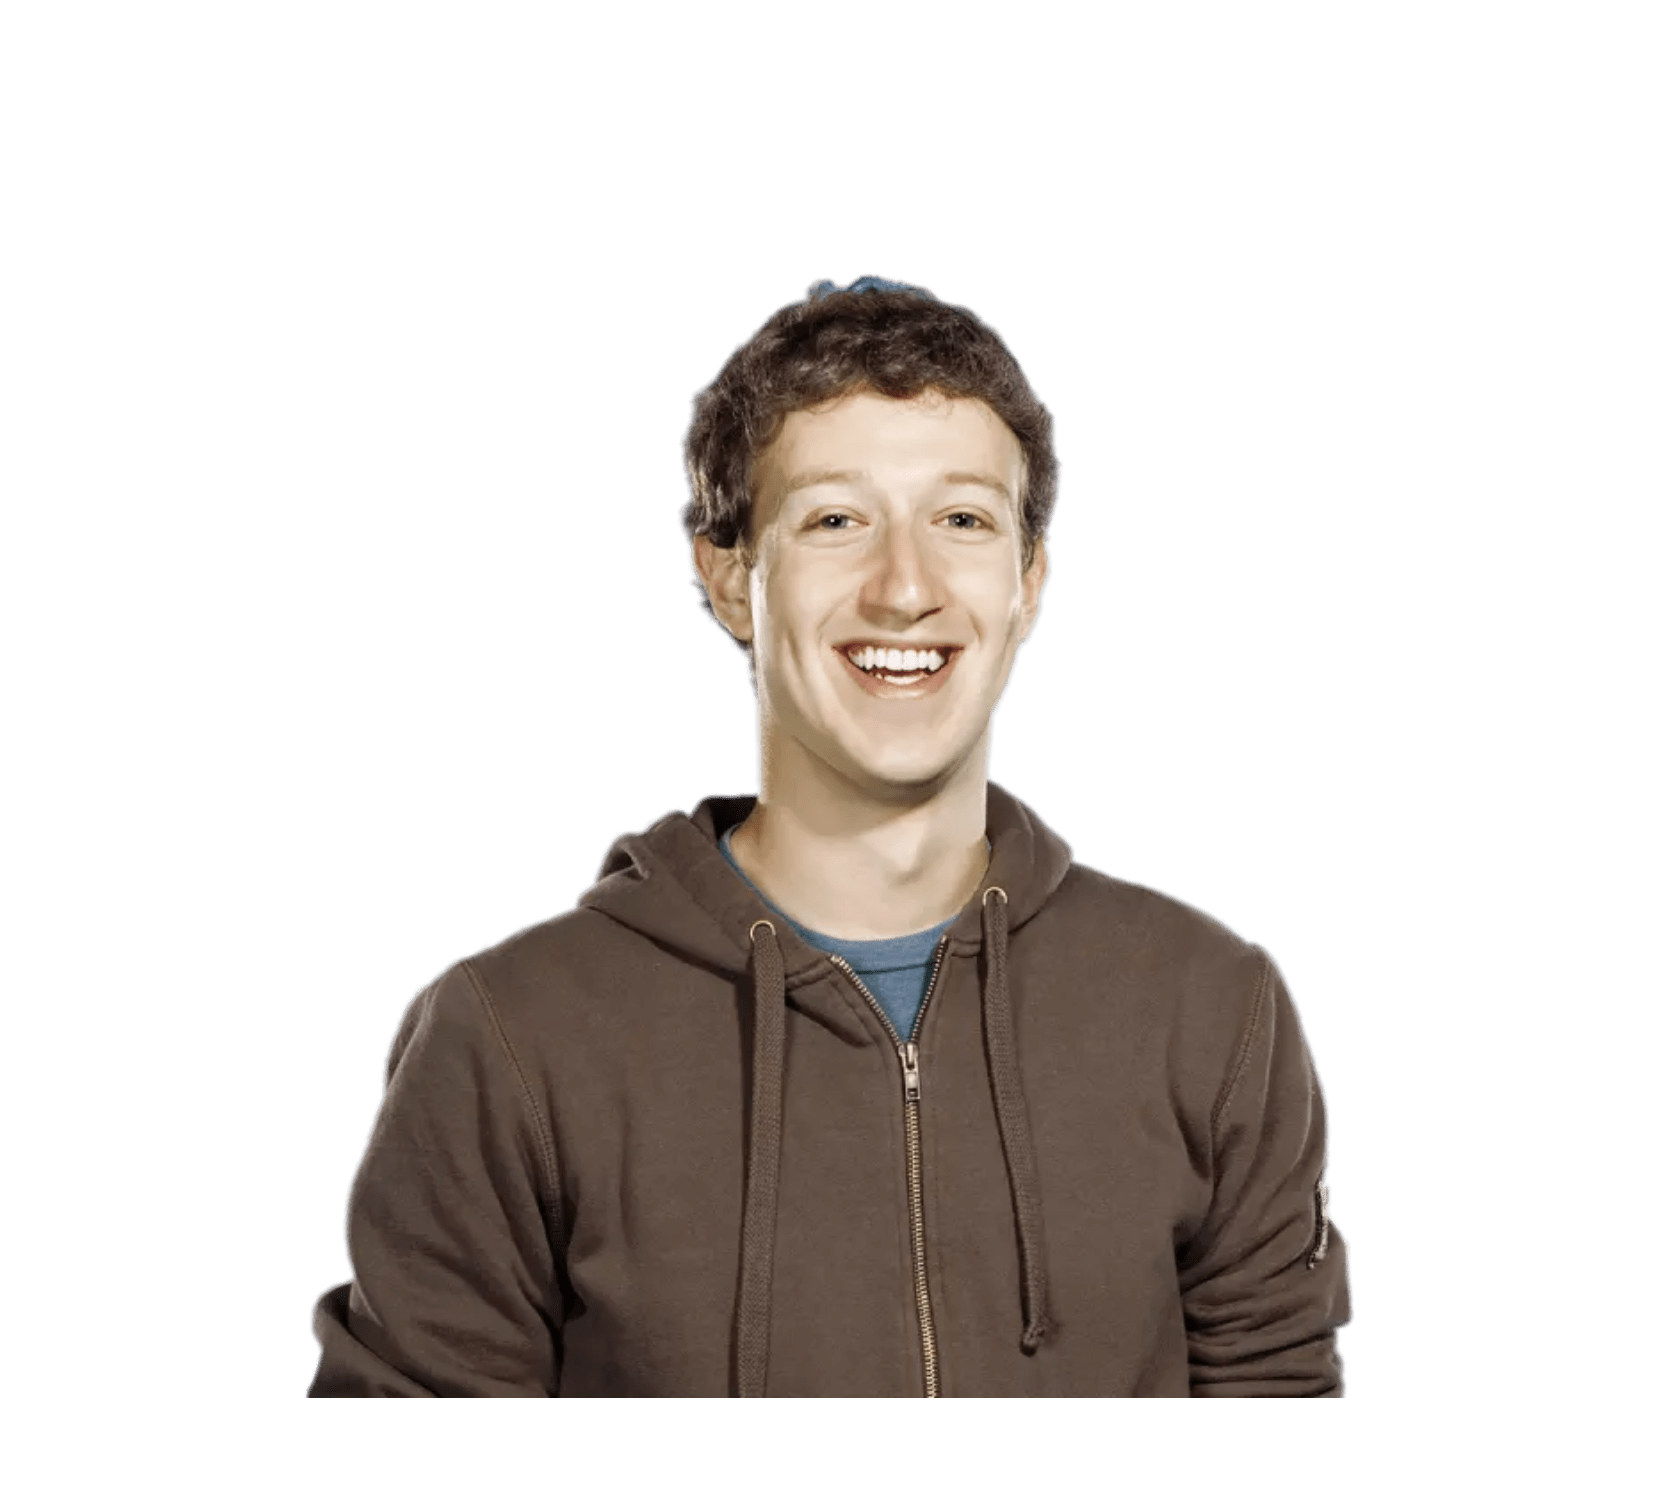 Mark Zuckerberg Facebook Founder PNG Best Image pngteam.com